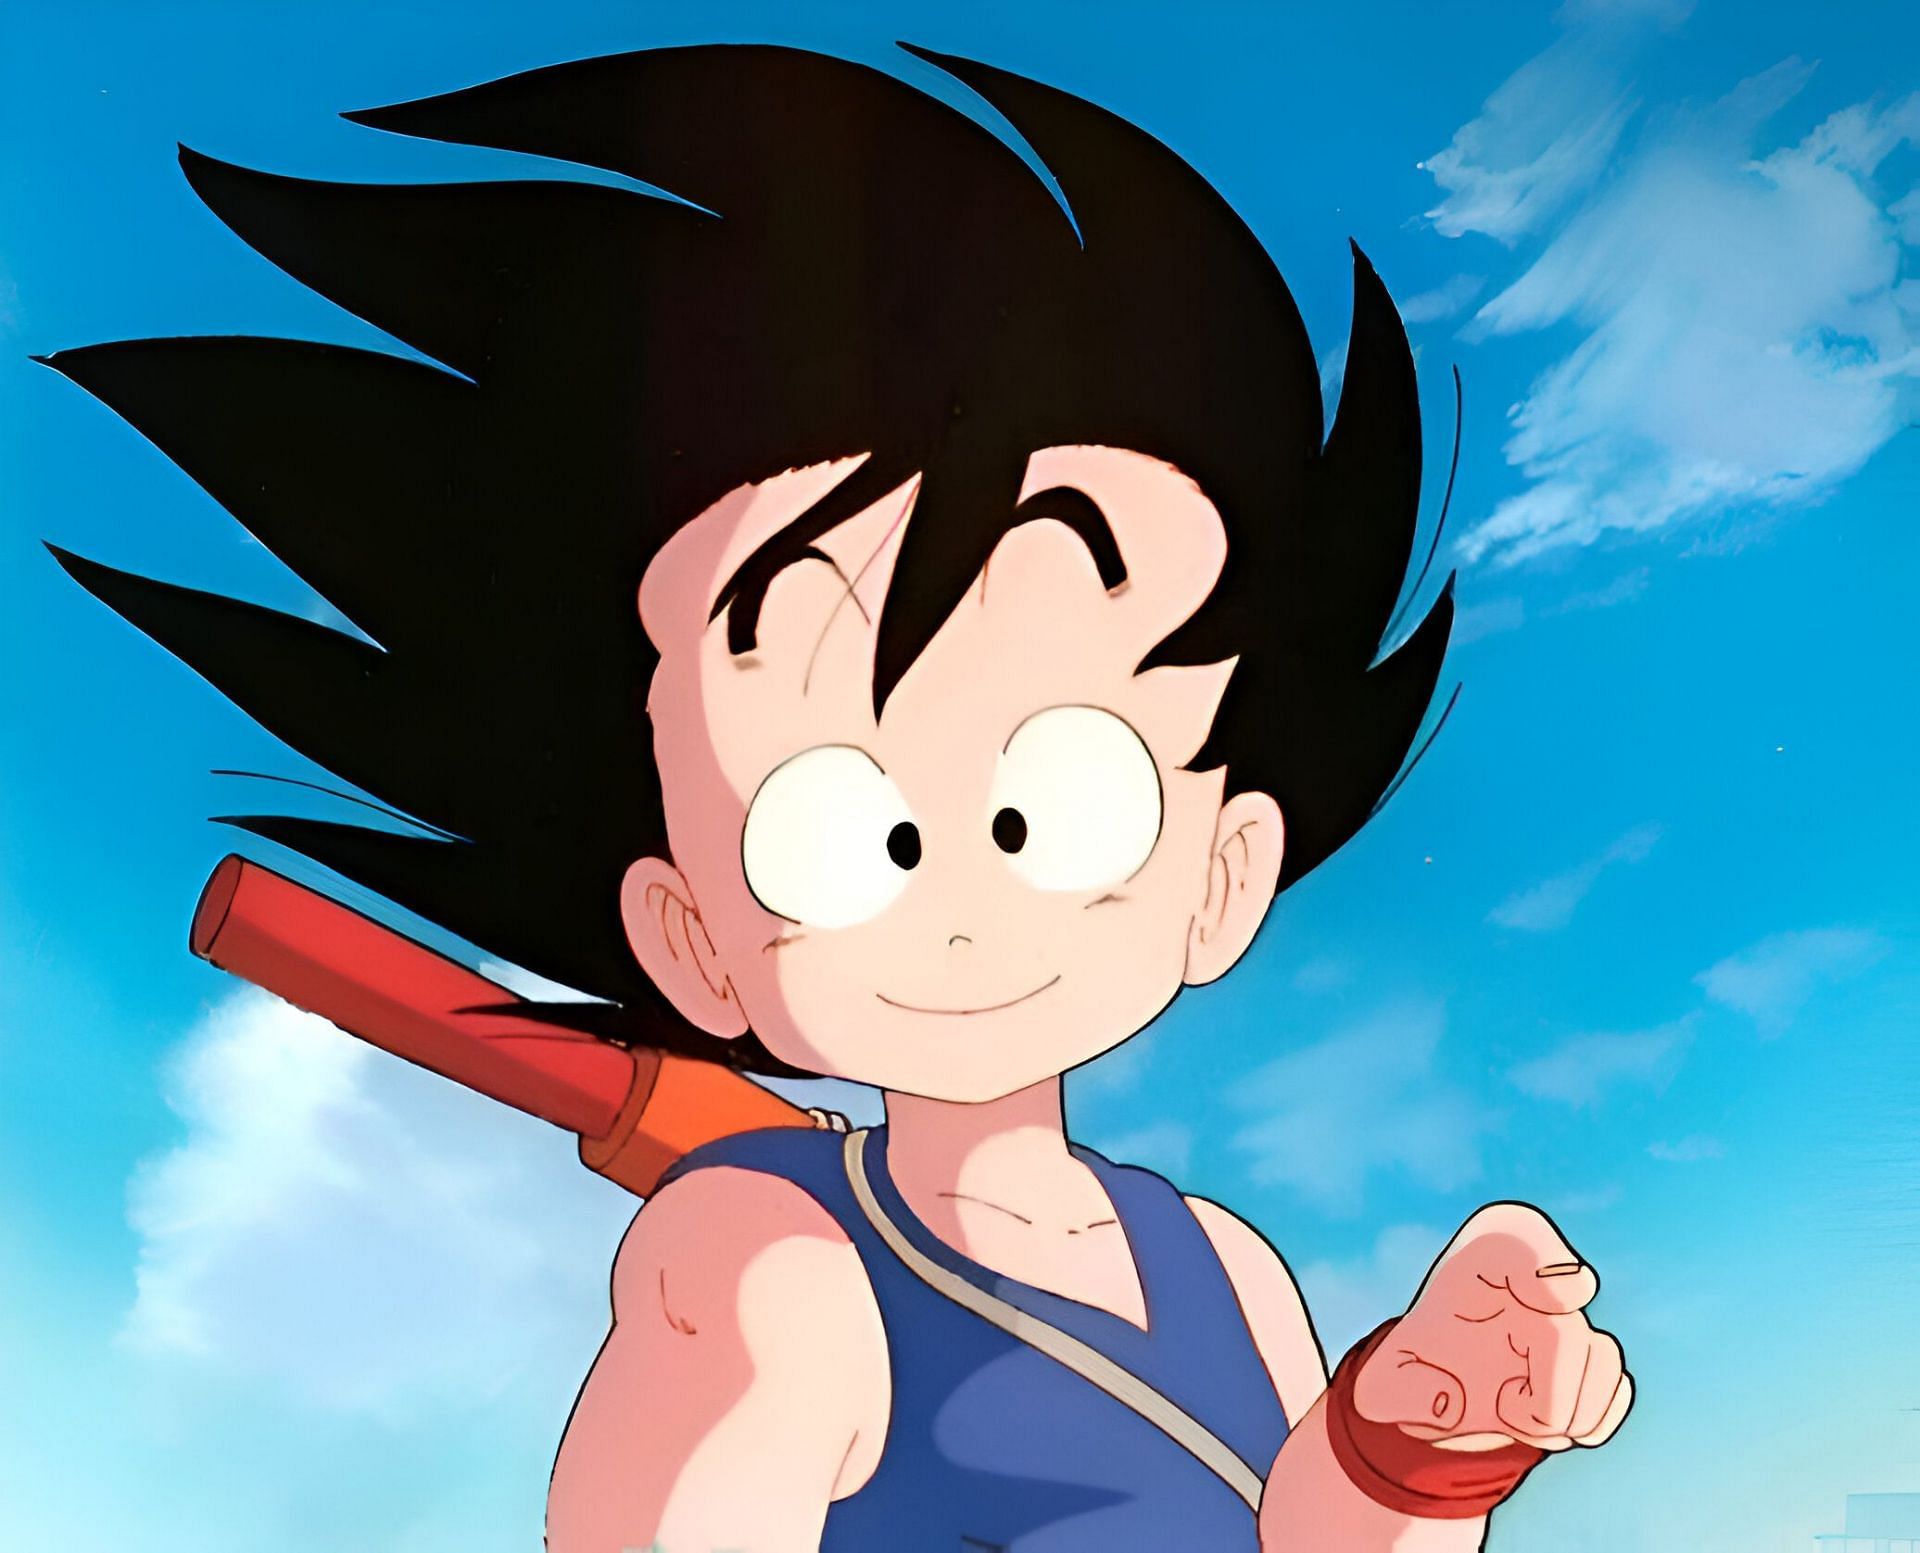 Son Goku as seen in the Dragon Ball anime (Image via Toei Animation)